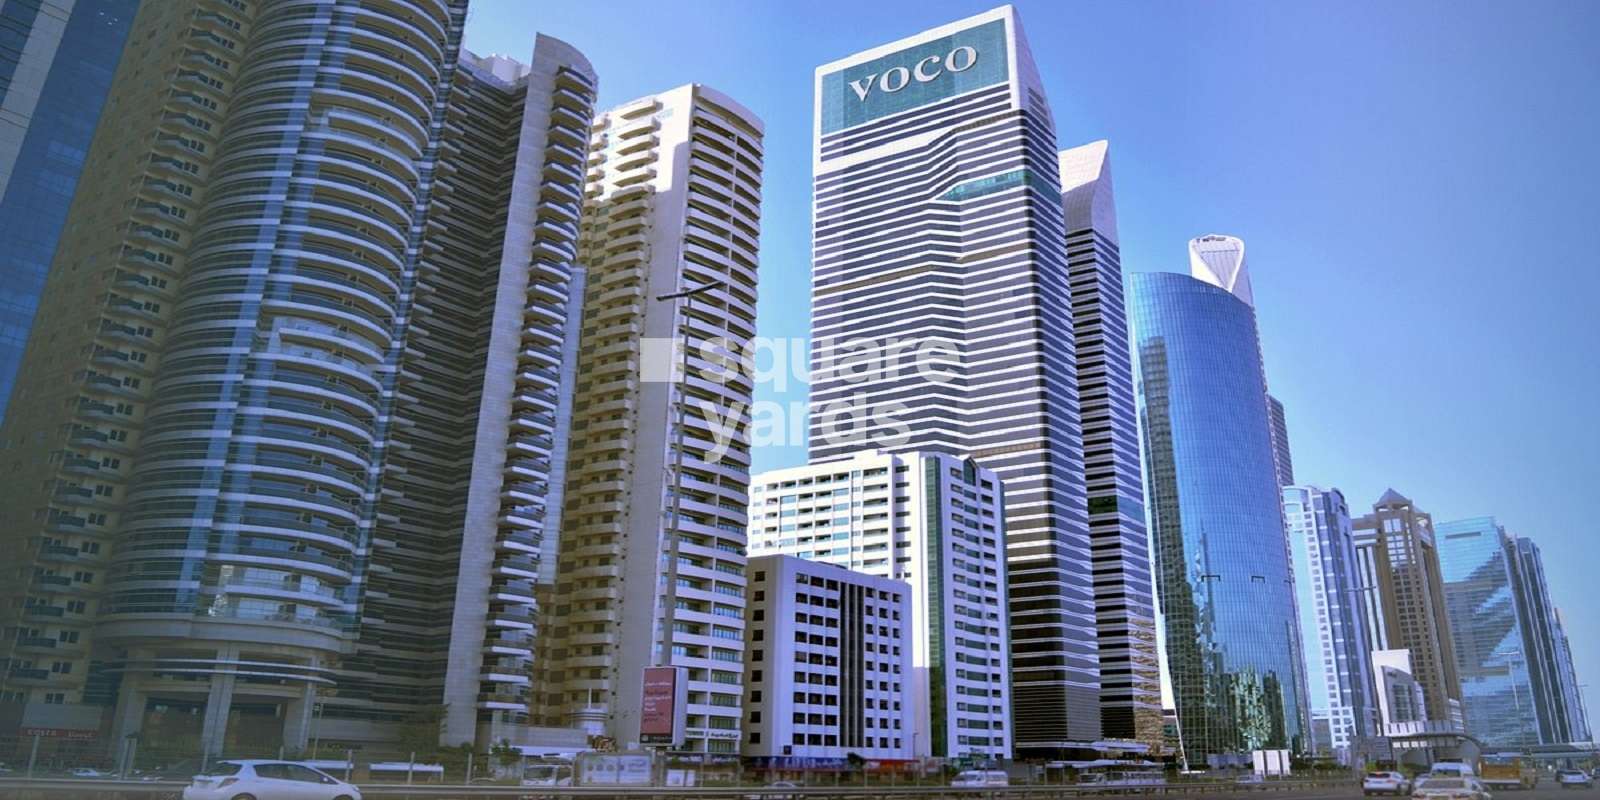 Voco Dubai Hotel Cover Image